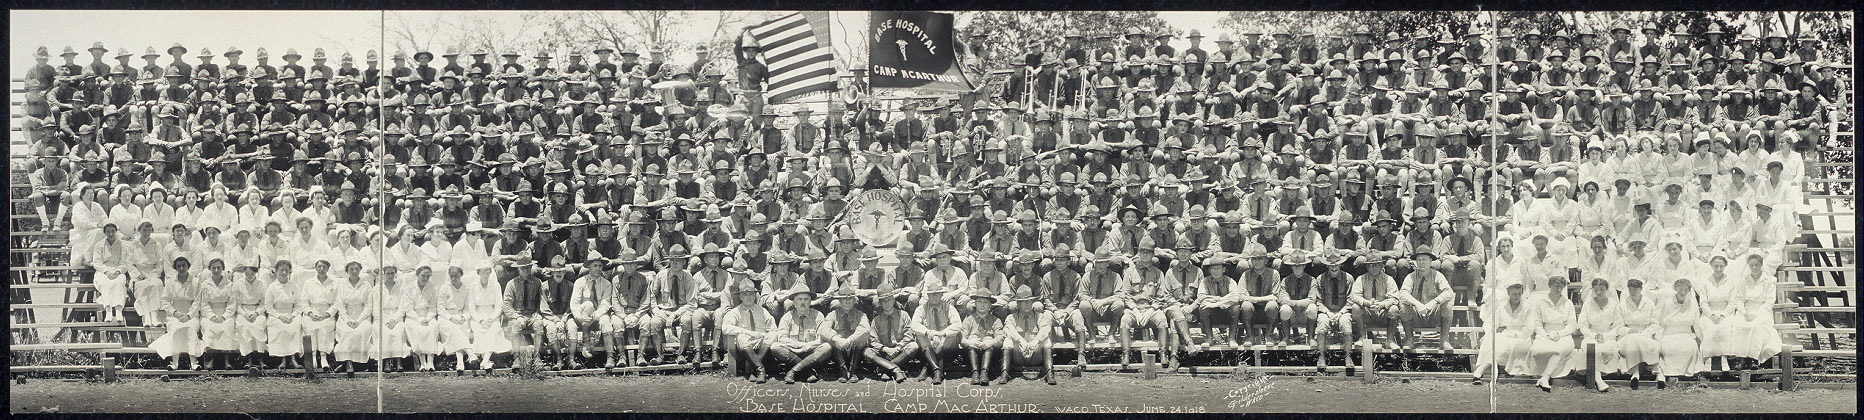 officers-nurses-and-hospital-corps-base-hospital-camp-macarthur-waco-texas-june-4-1918-loc_3006359876_o.jpg